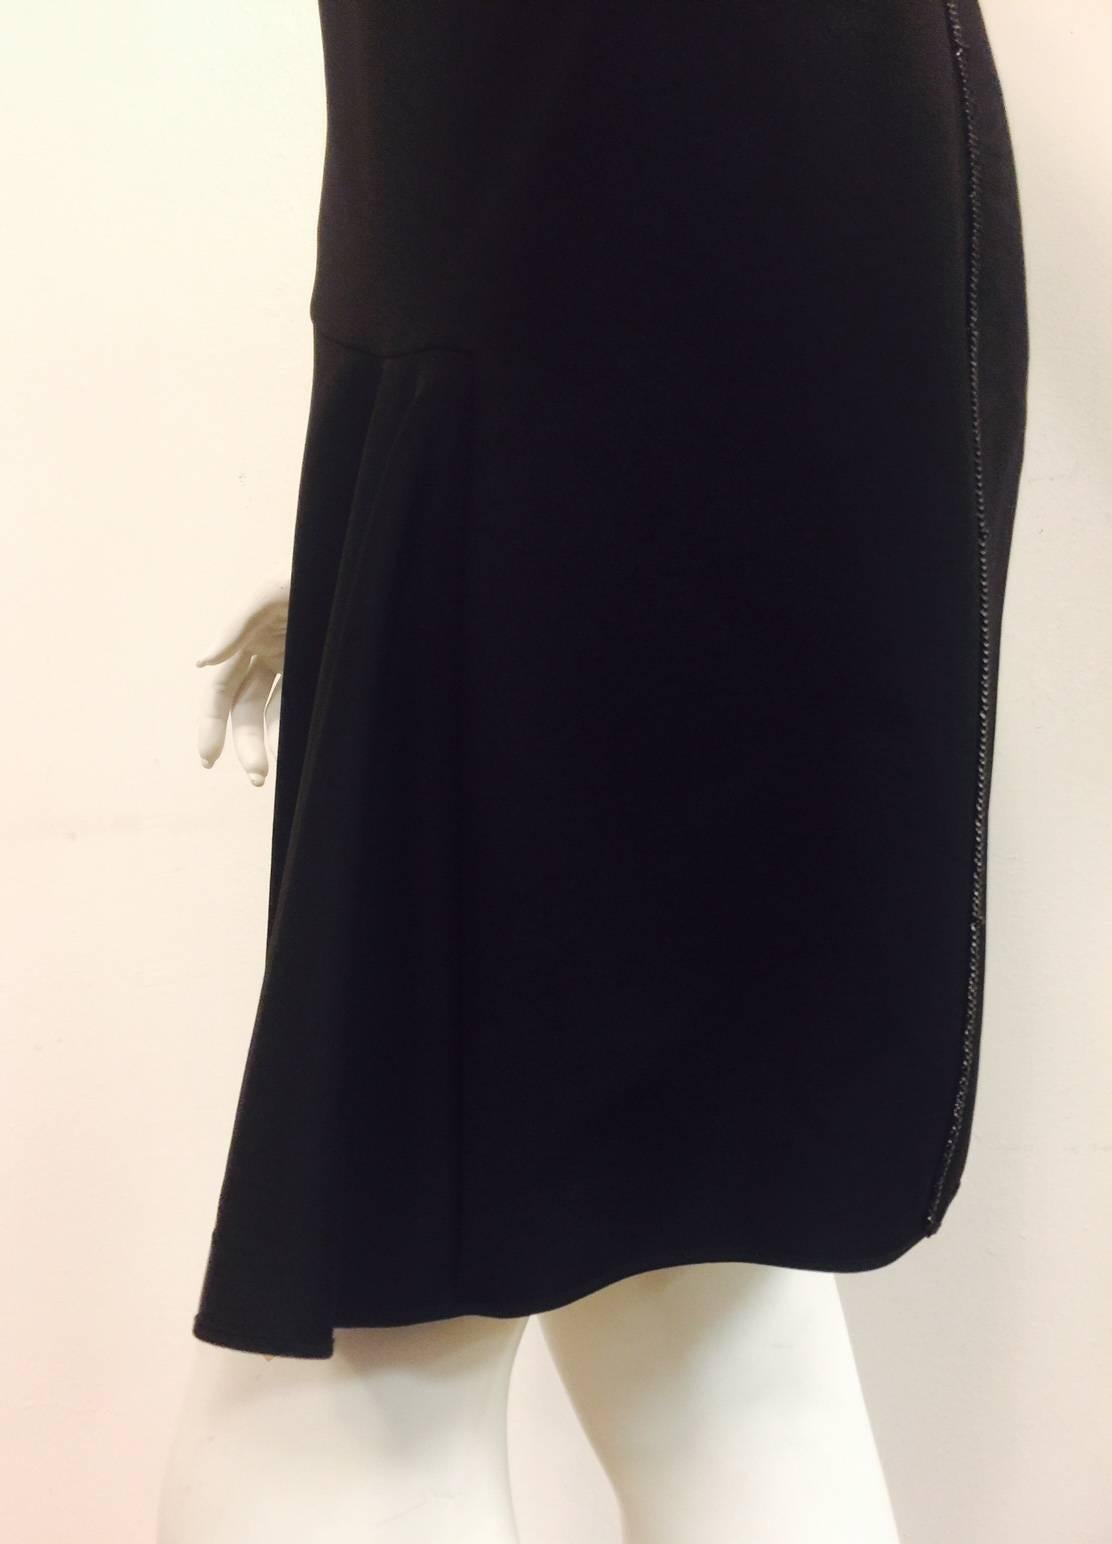 Sensational Stella Mc Cartney Little Black Dress With Decorative Chains at Sides 3